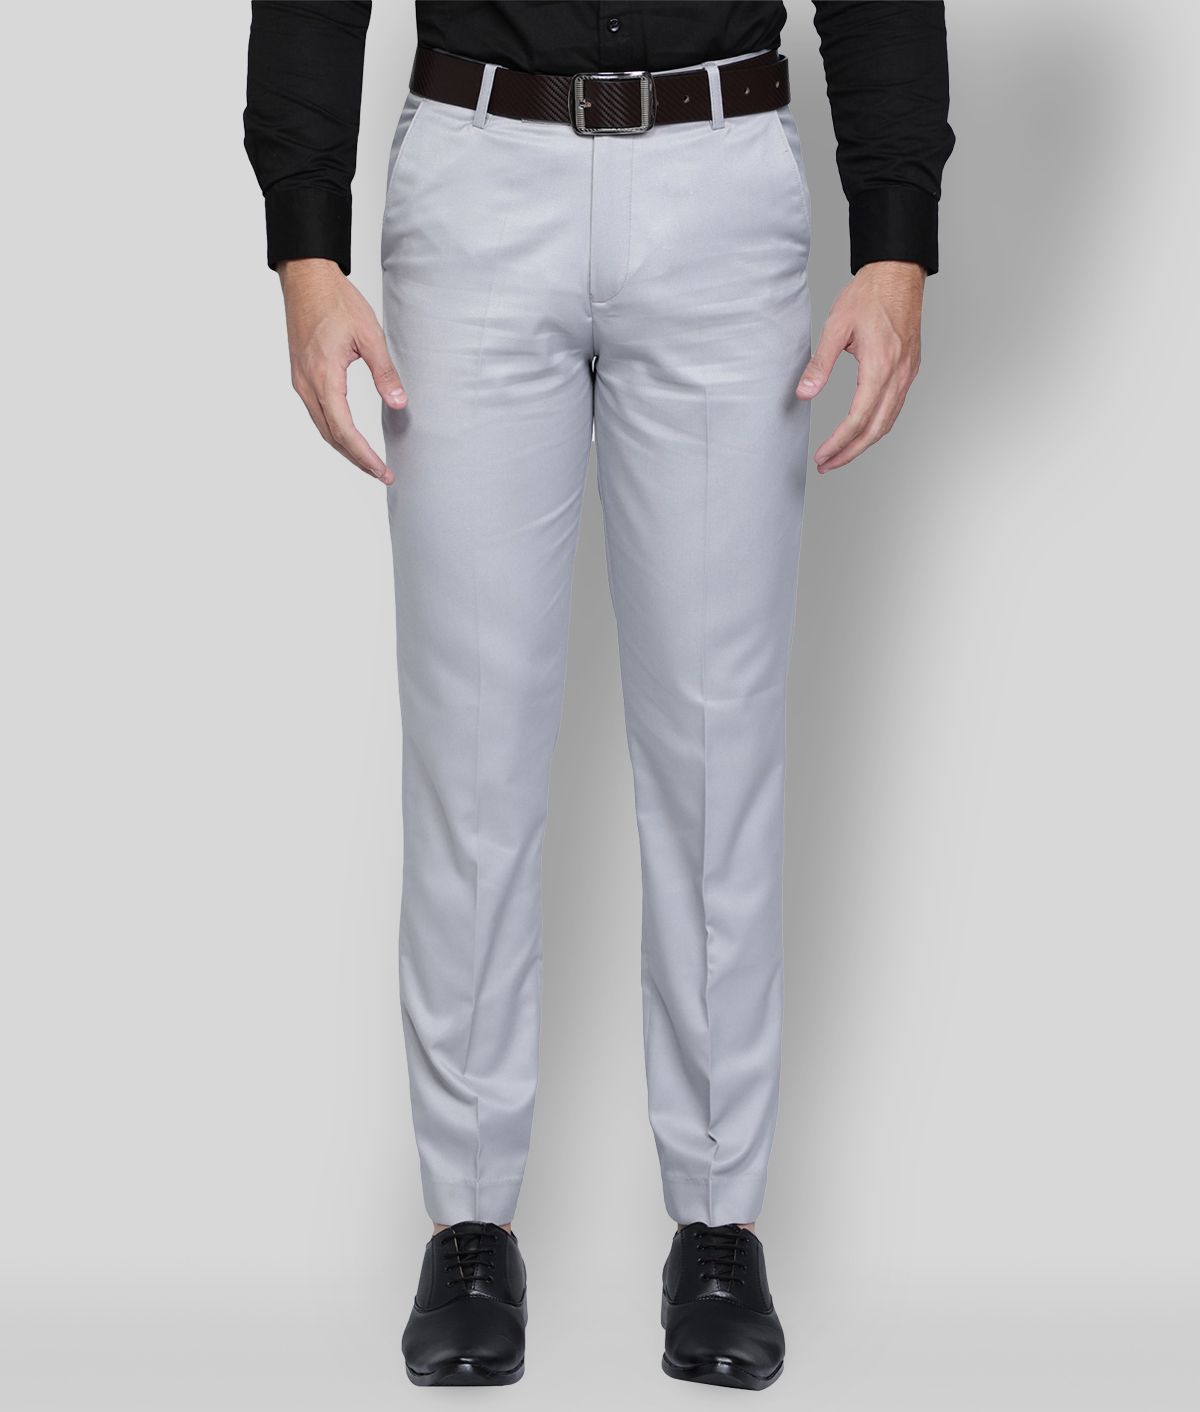     			Haul Chic - Multi Cotton Blend Slim Fit Men's Formal Pants (Pack of 1)